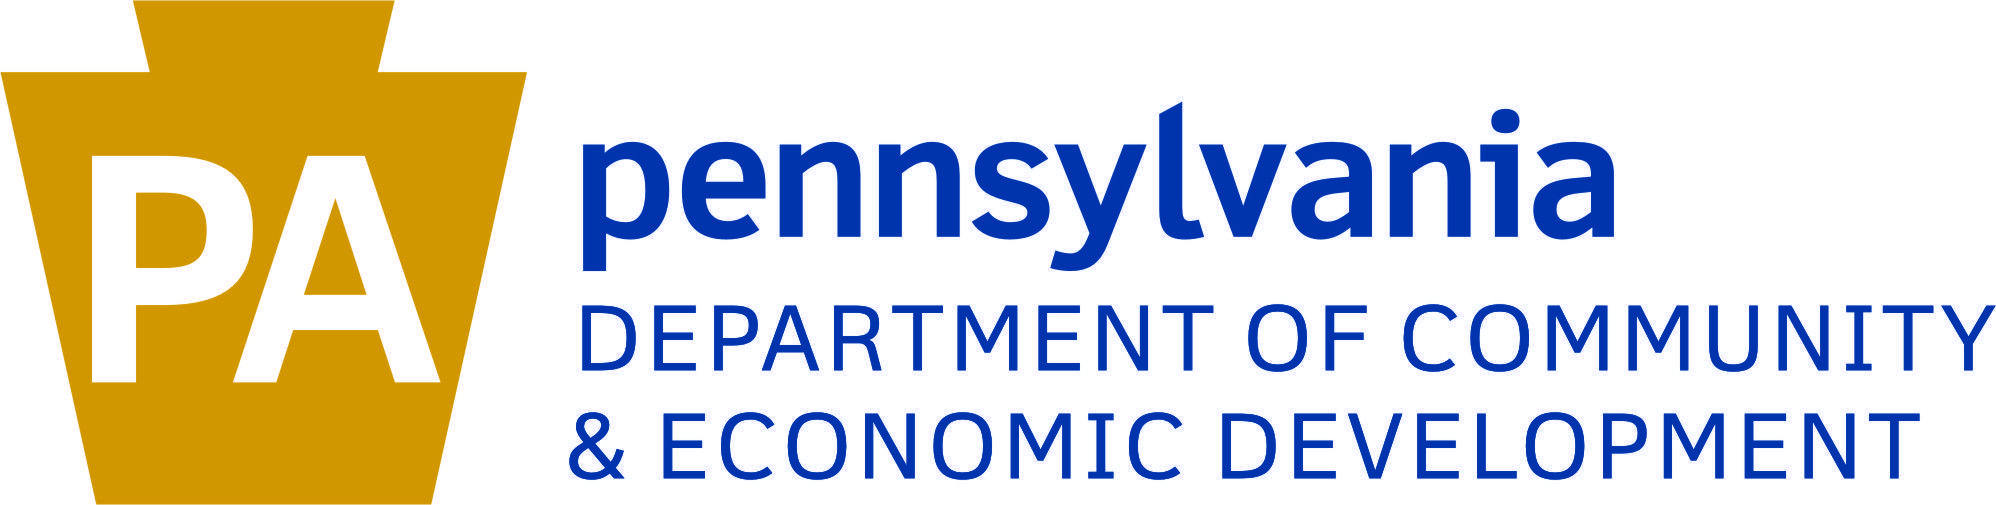 The Pennsylvania Logo - Logo Use Guidelines Department of Community & Economic Development